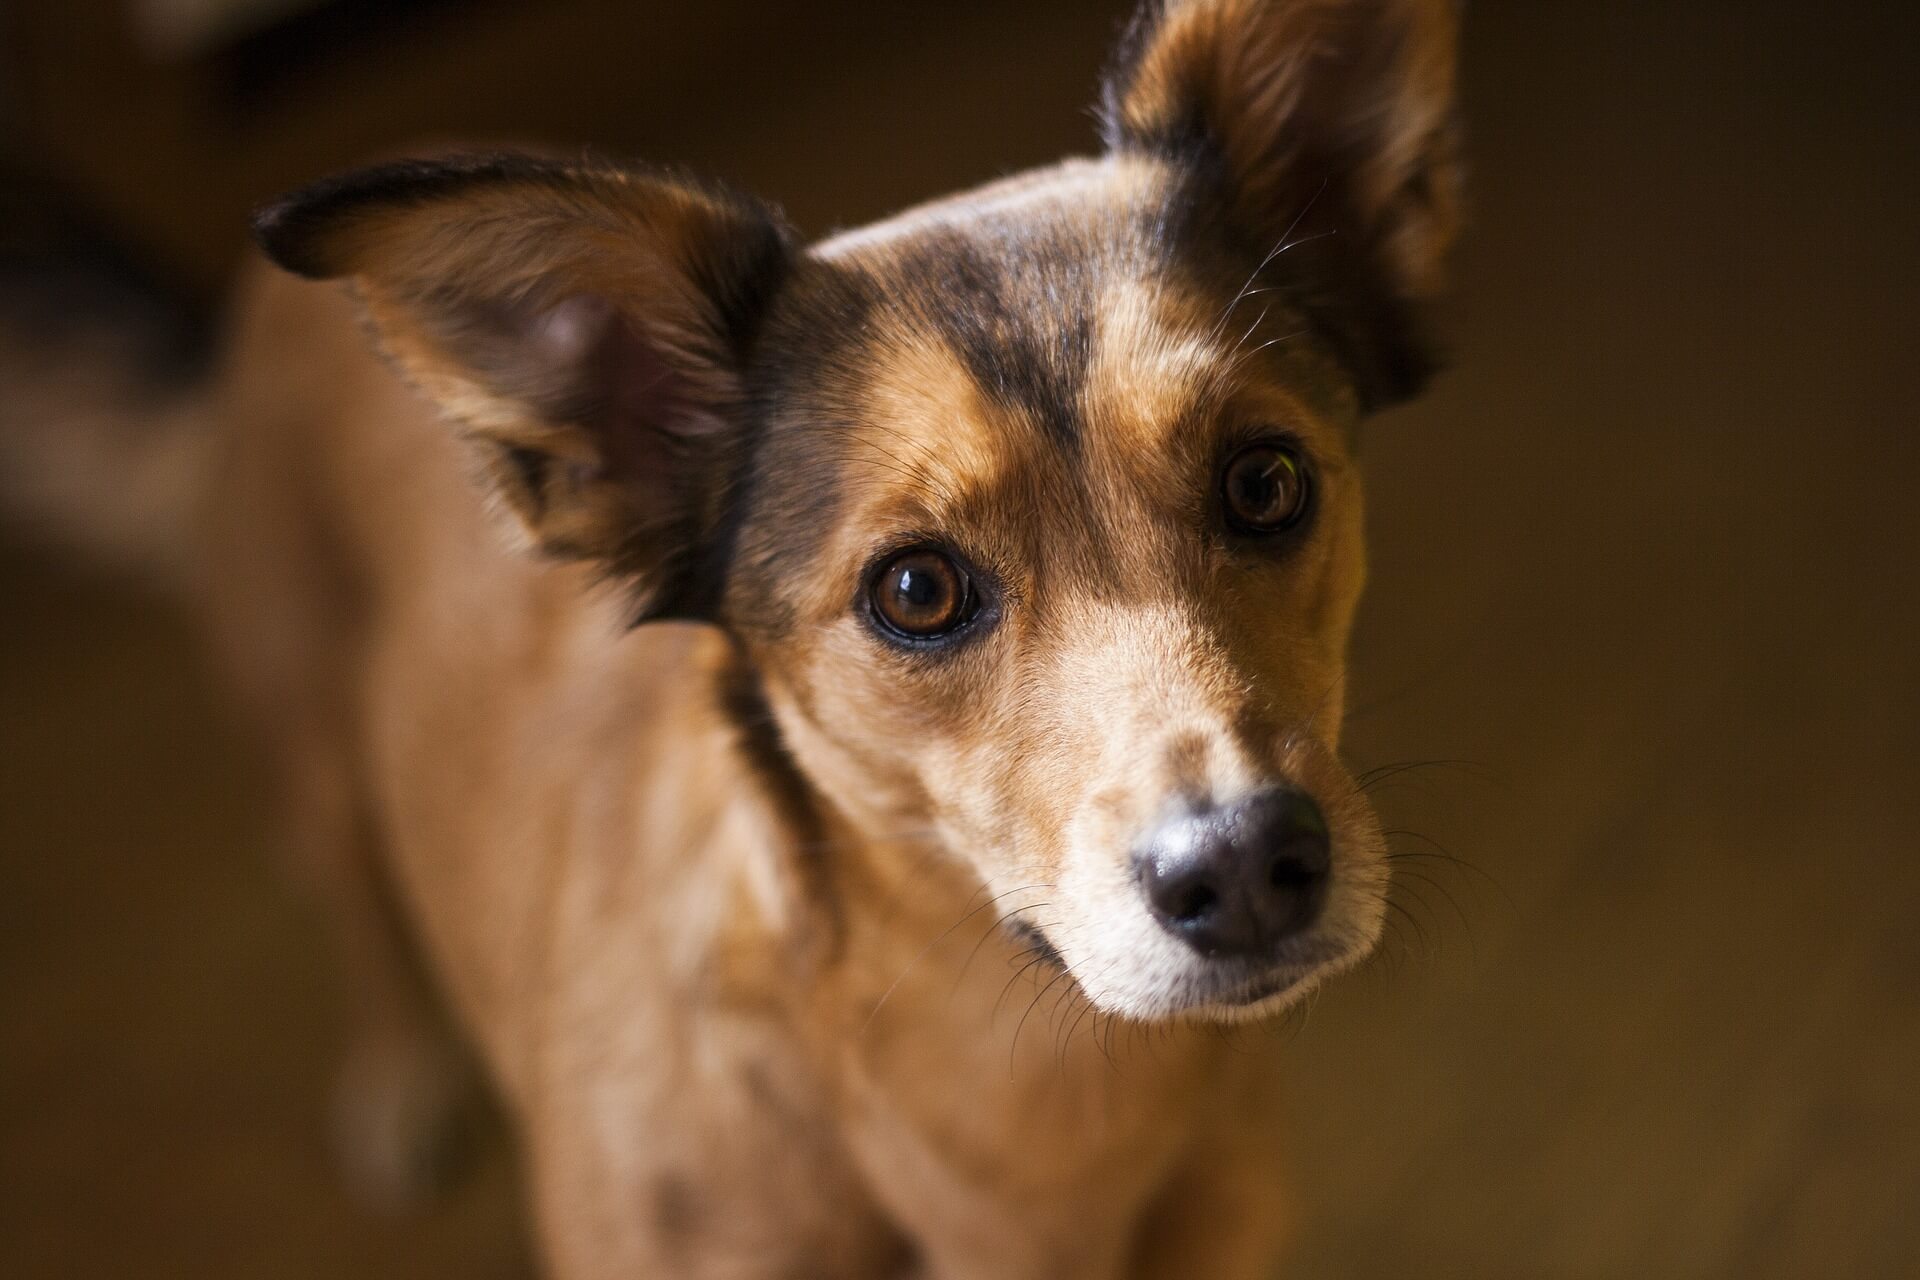 Rescuing Yulin Dogs Will Backfire, Animal Charities Warn